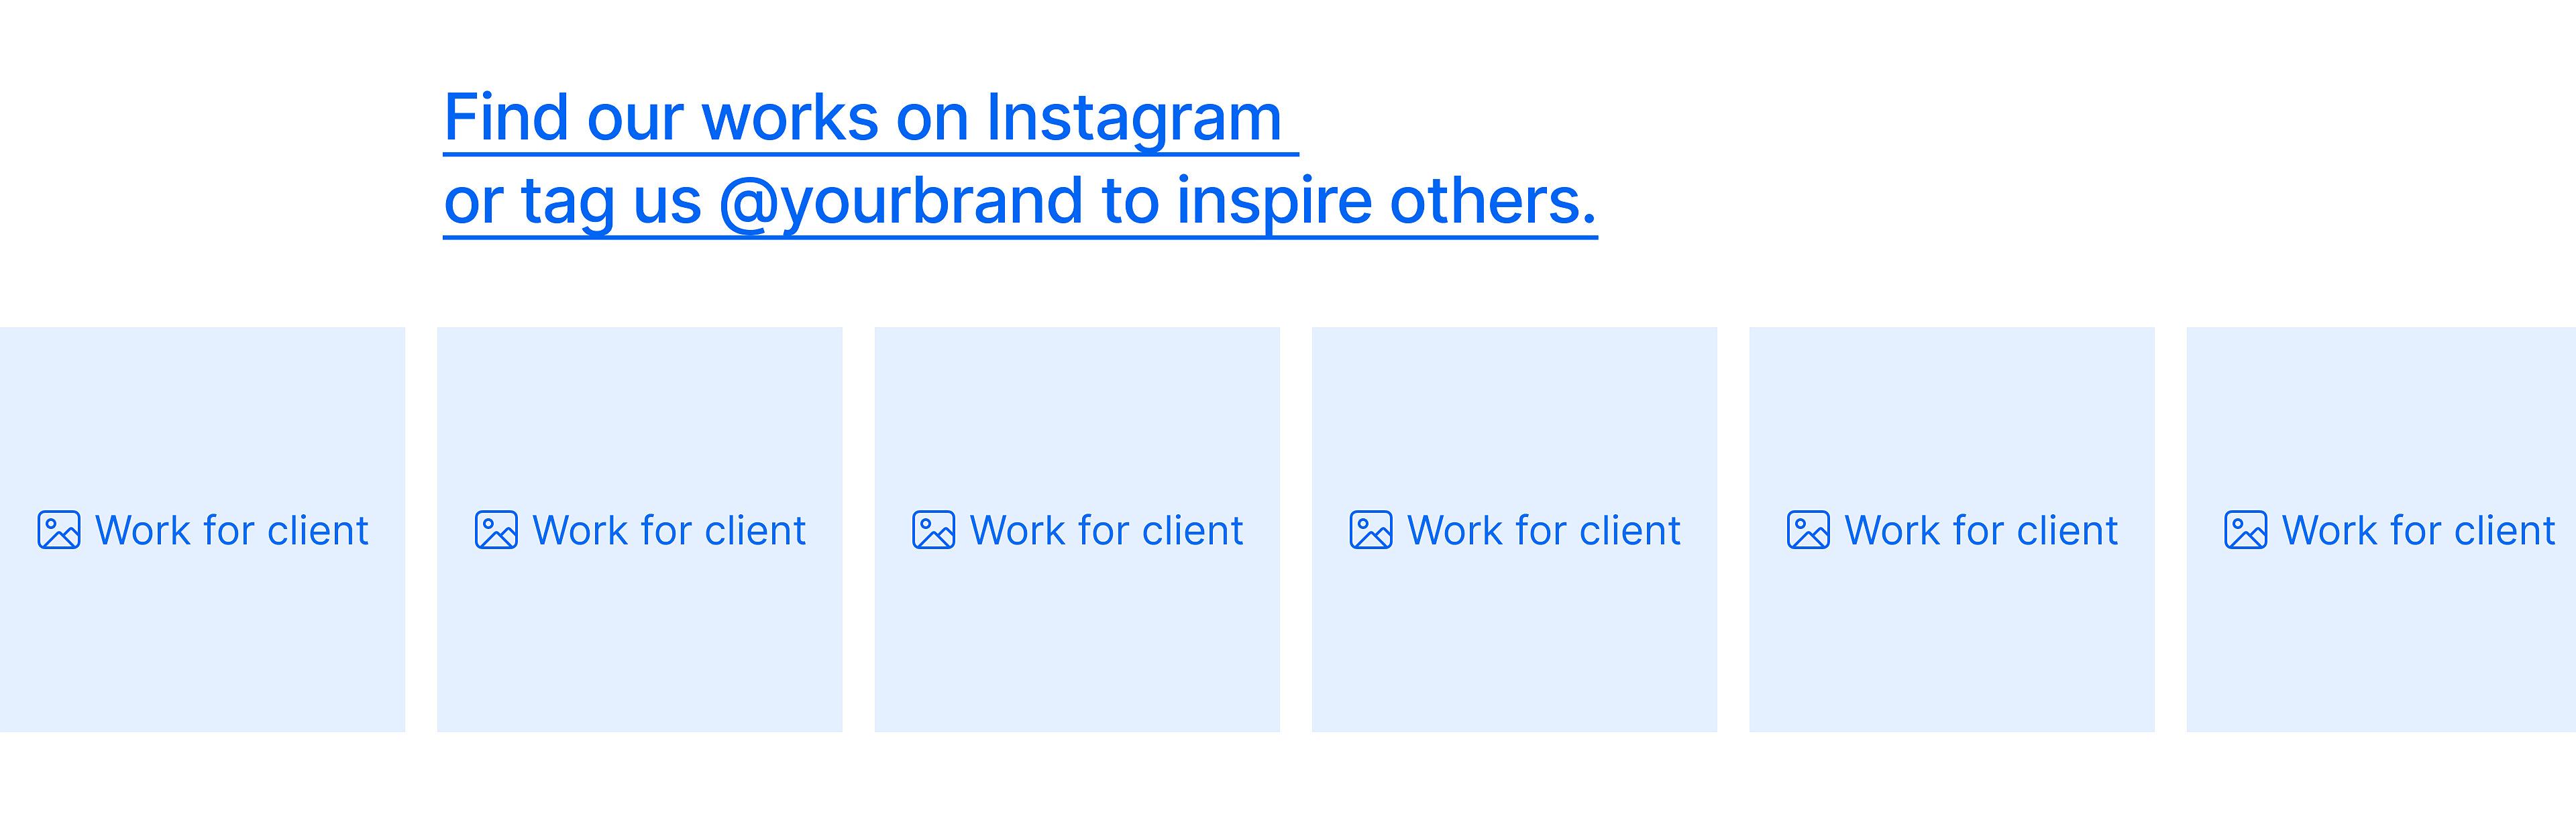 Blueprint of find our works on social media